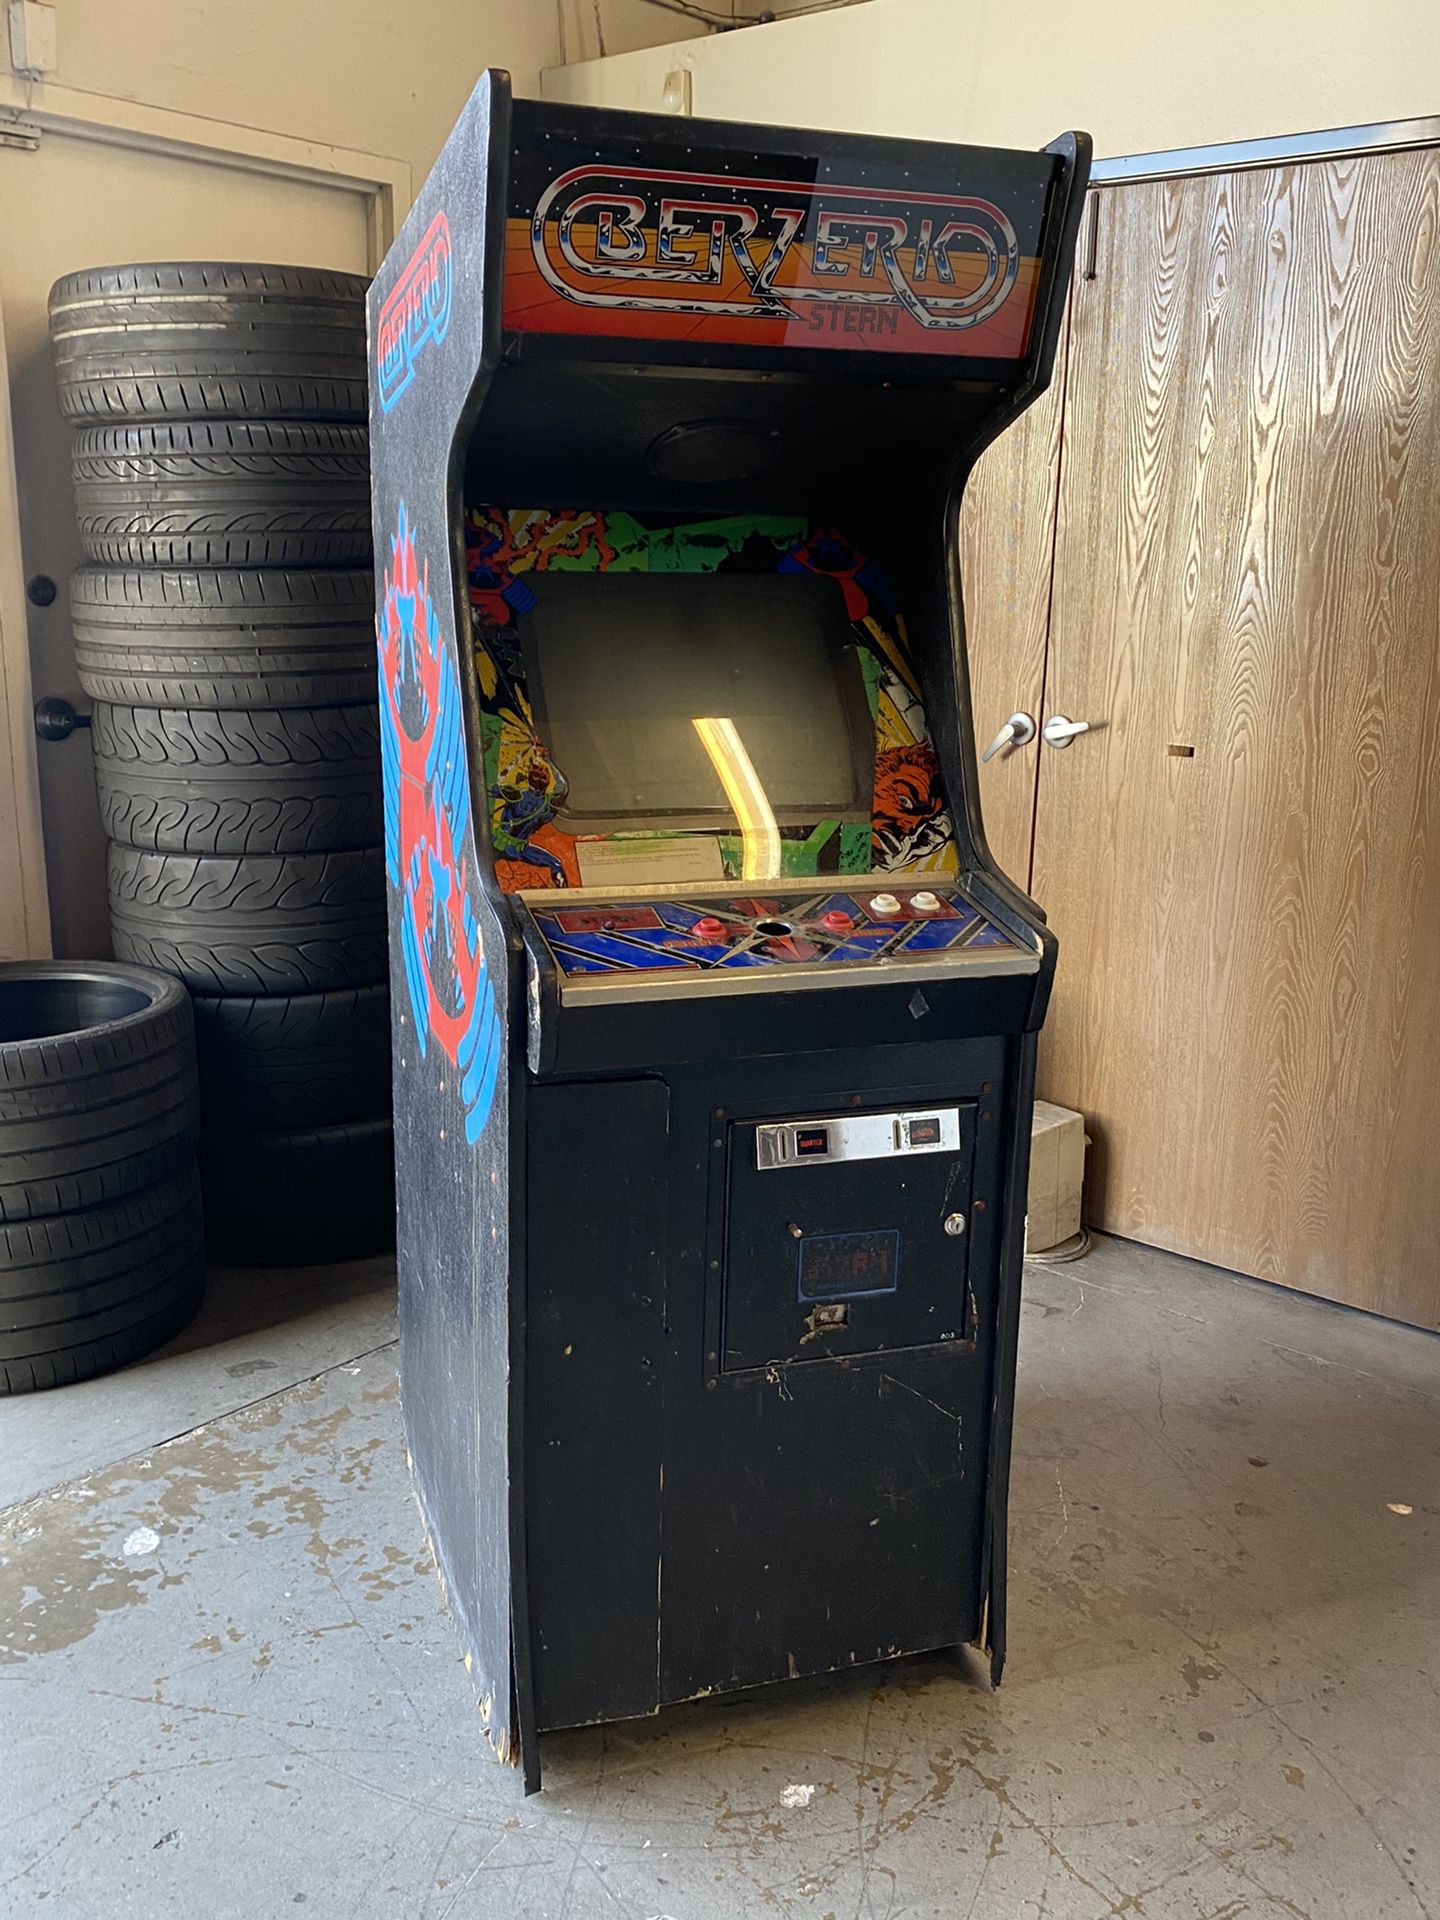 Berzerk arcade game